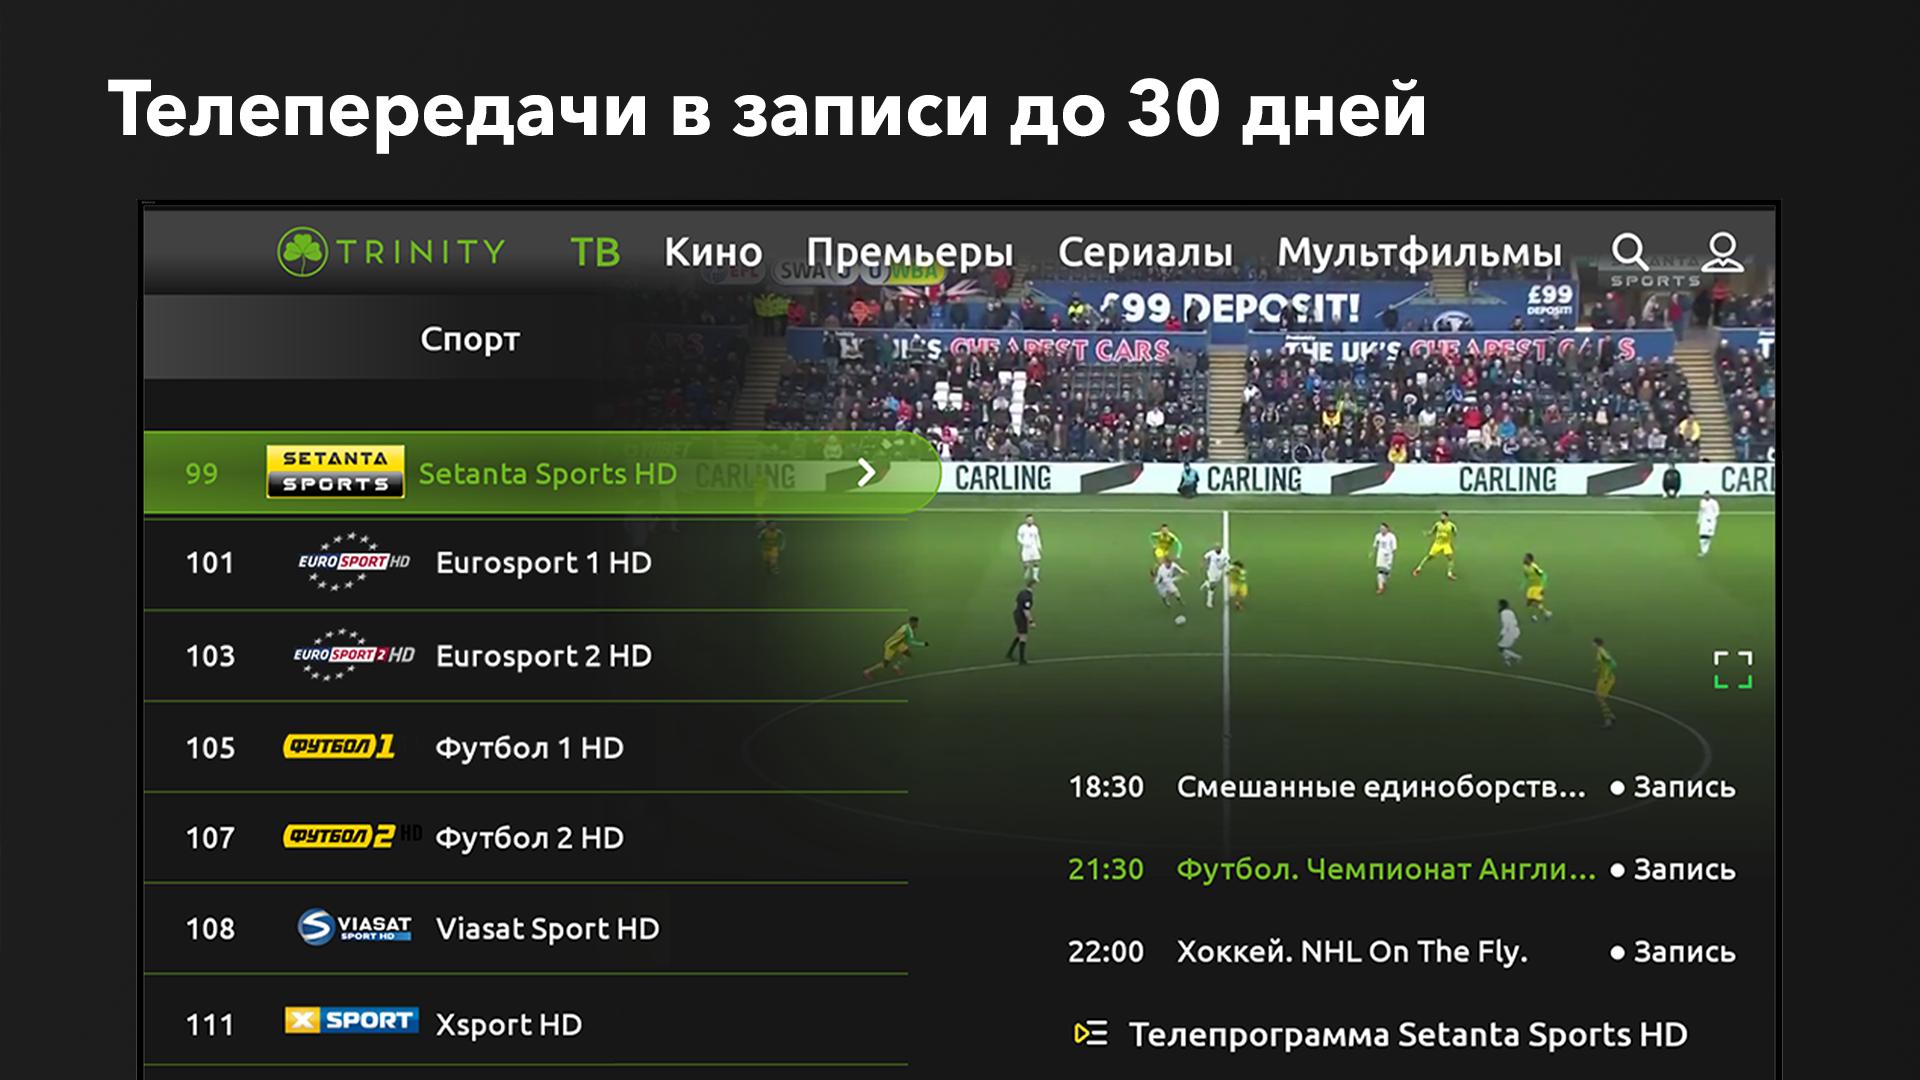 Setanta sports 1 прямой. Trinity TV Android. Trinity-TV. Setanta Sports 1.